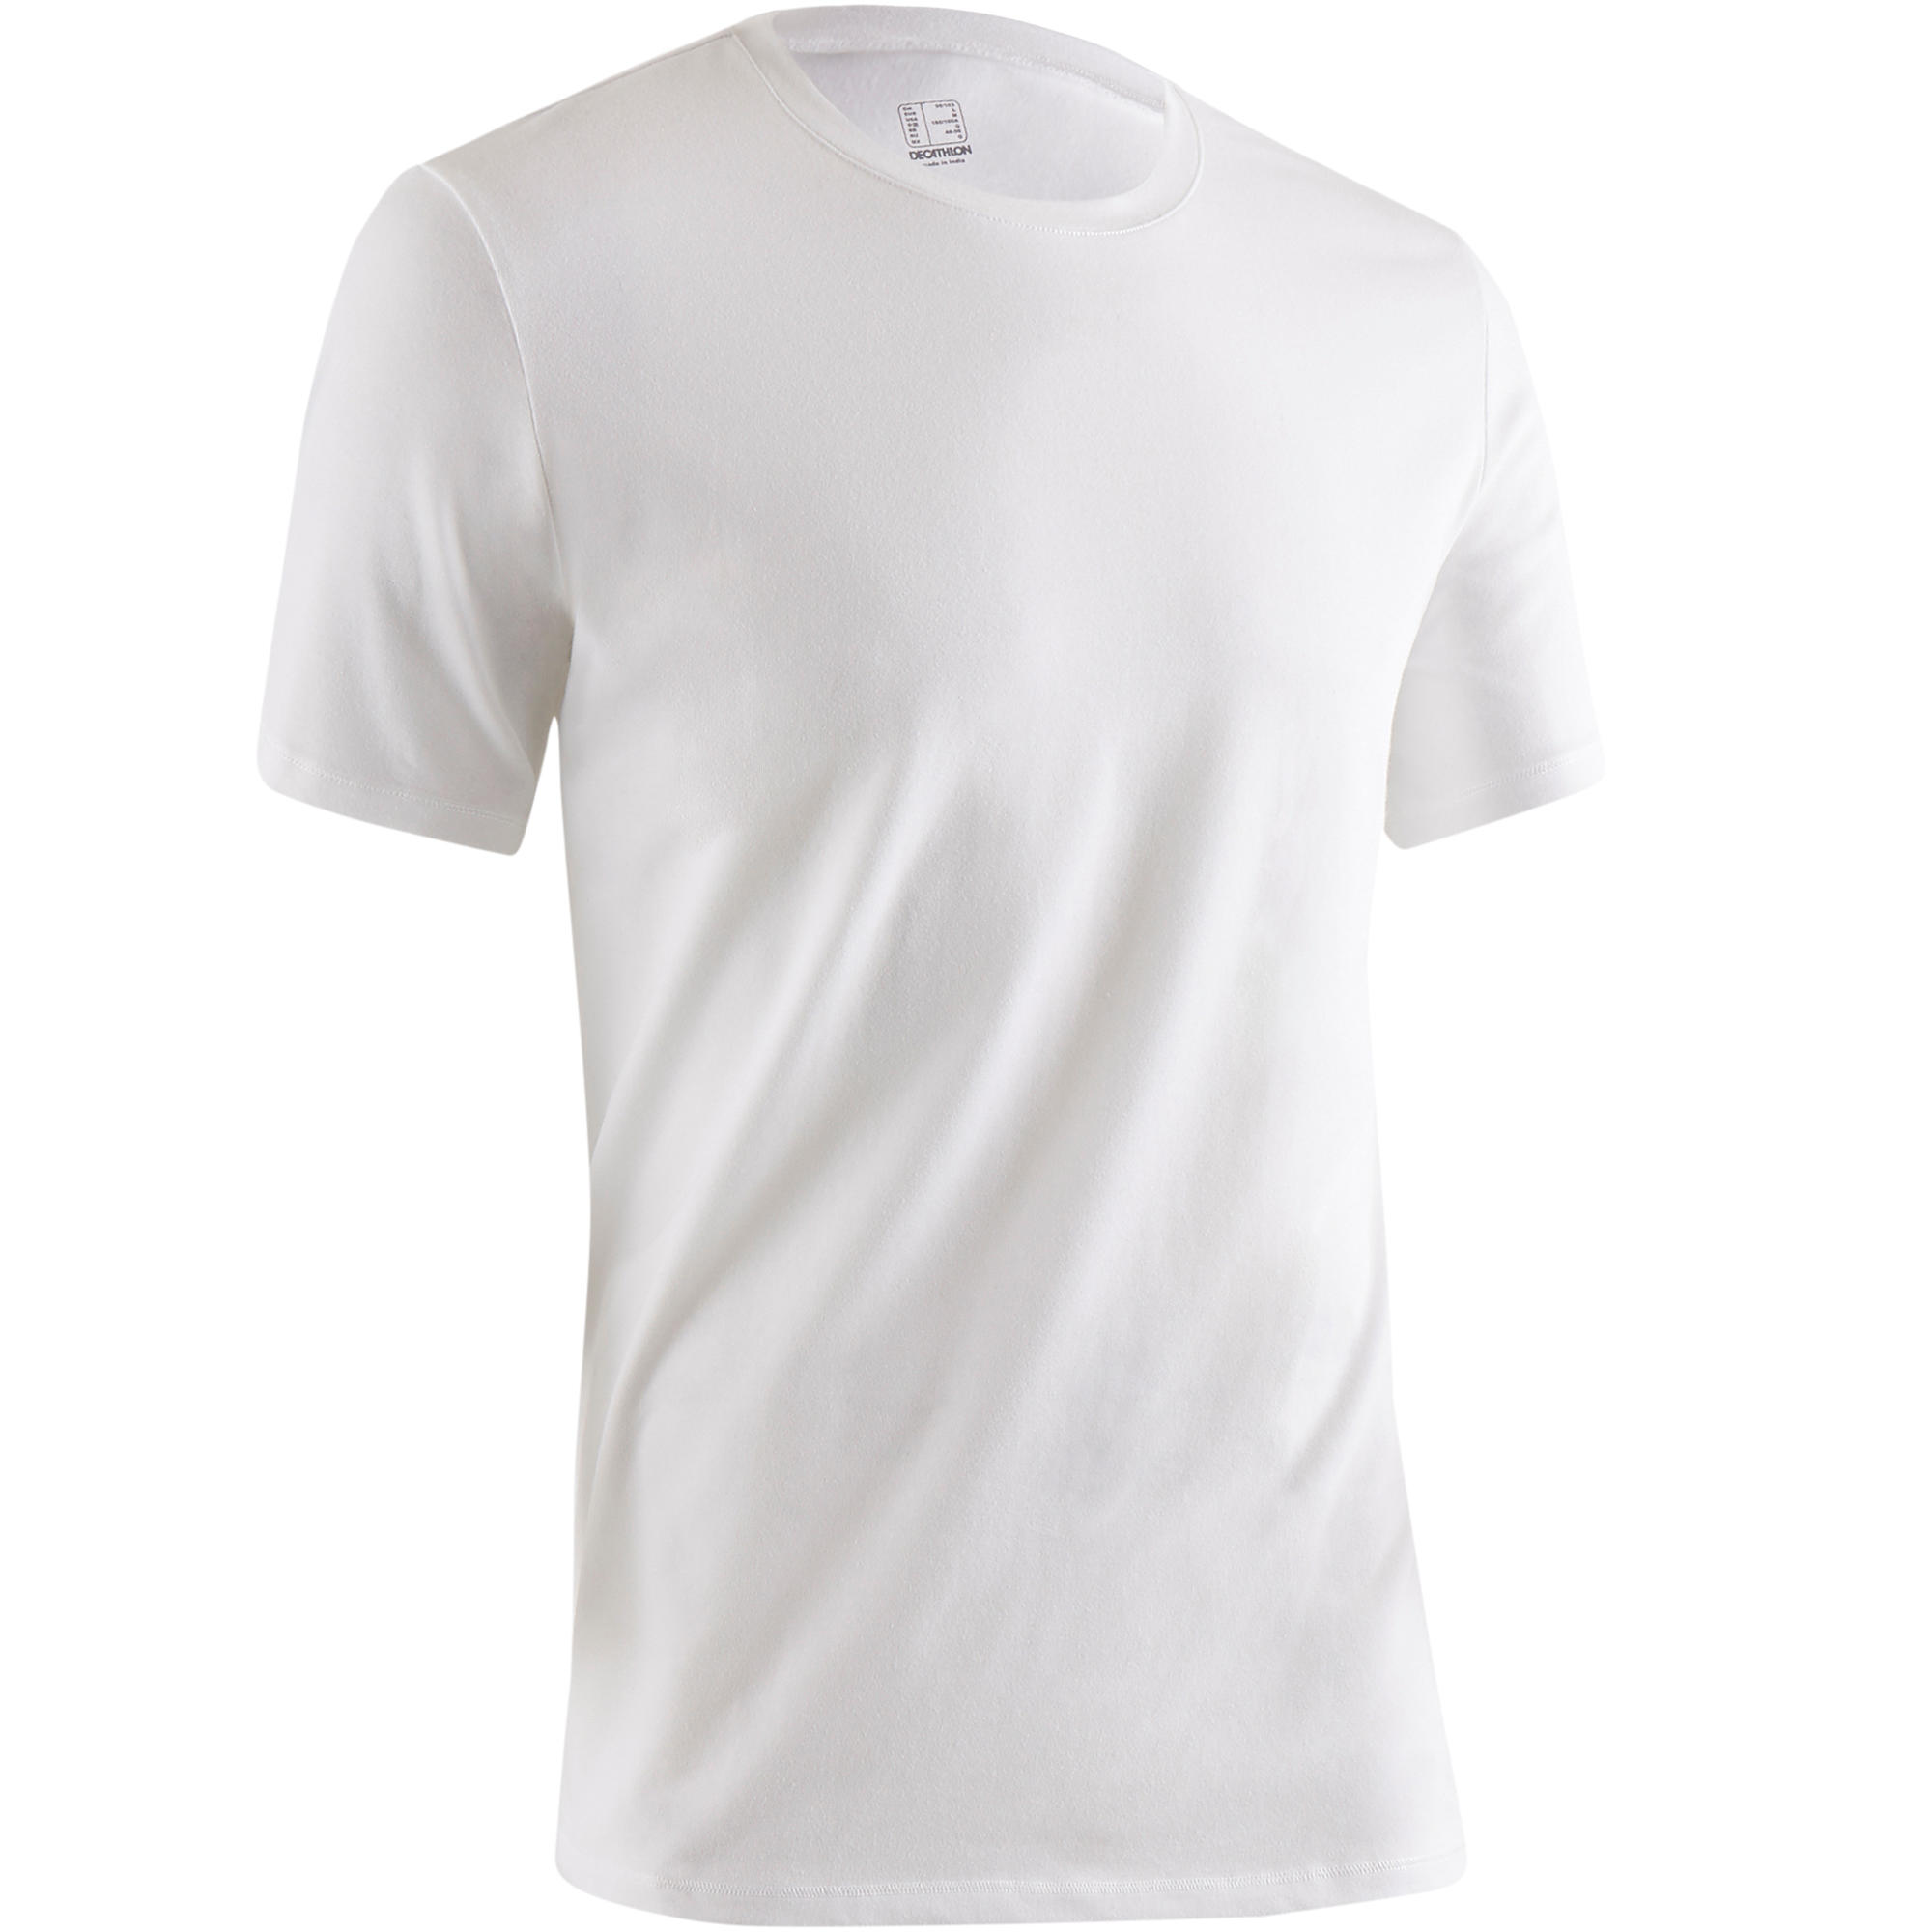 decathlon white t shirt